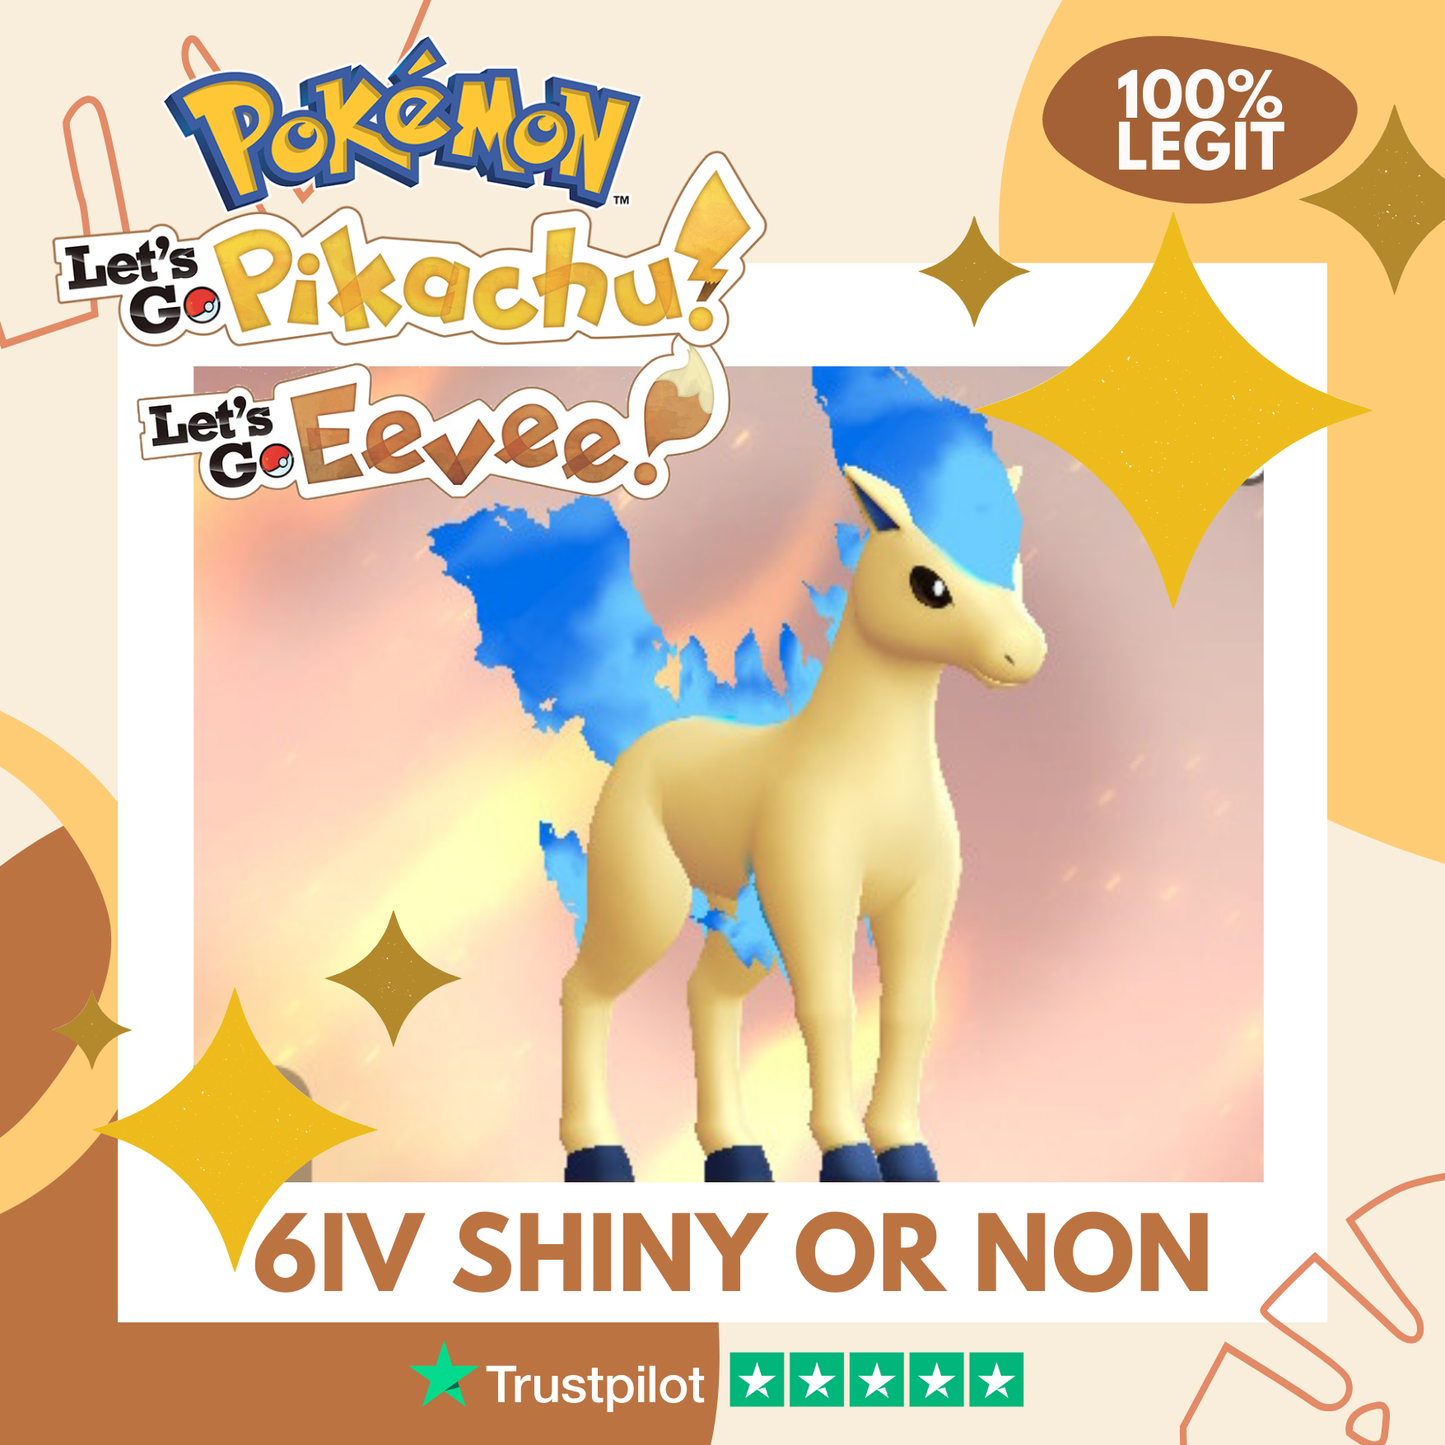 Ponyta Shiny ✨ or Non Shiny Pokémon Let's Go Pikachu Eevee Level 1 Legit 6 IV 100% Legal from GO Park Customizable Custom OT by Shiny Living Dex | Shiny Living Dex